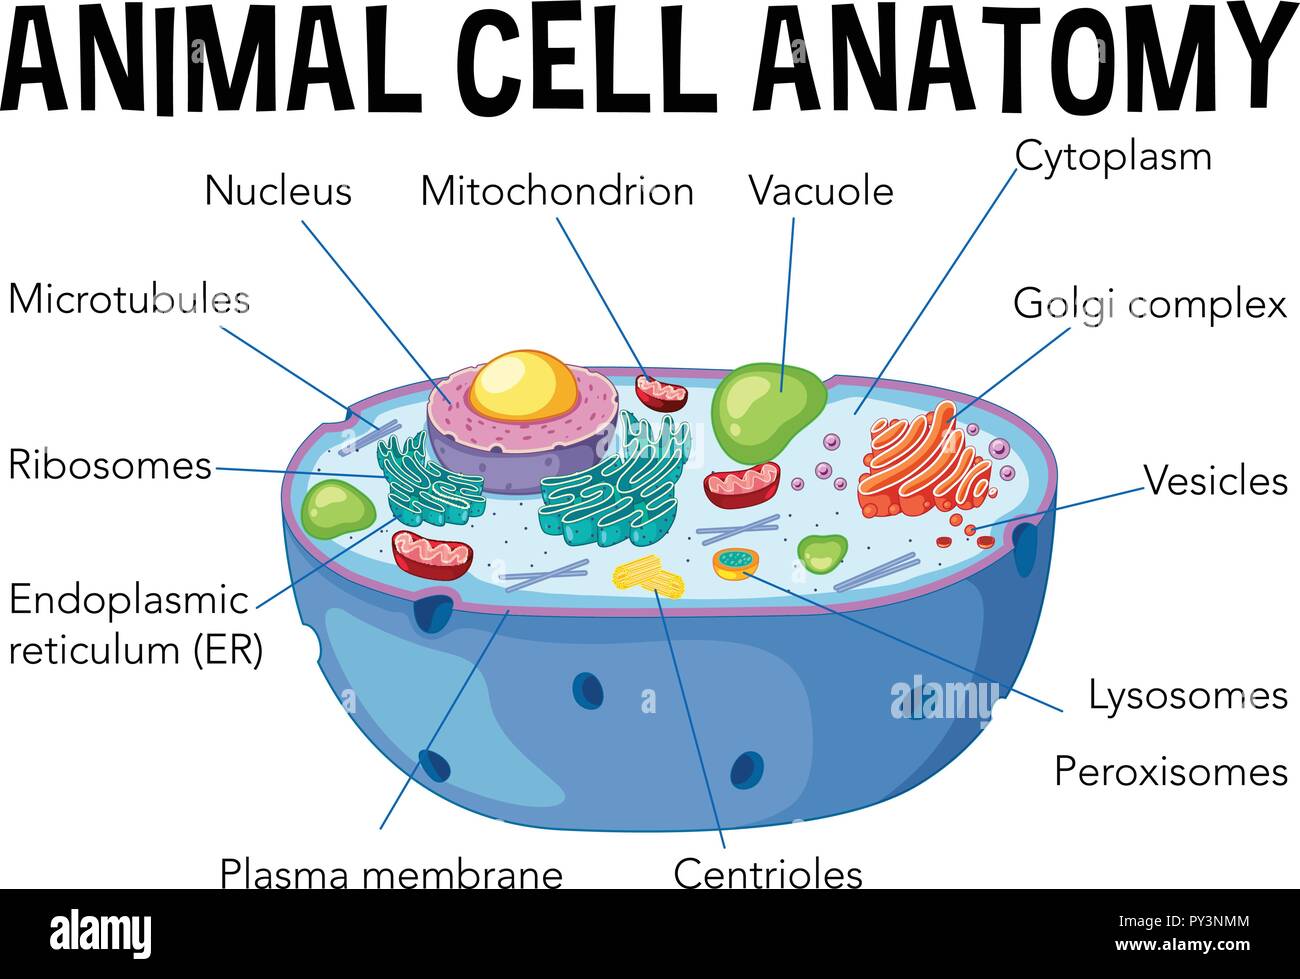 Animal cell anatomy diagram illustration Stock Vector Image & Art - Alamy